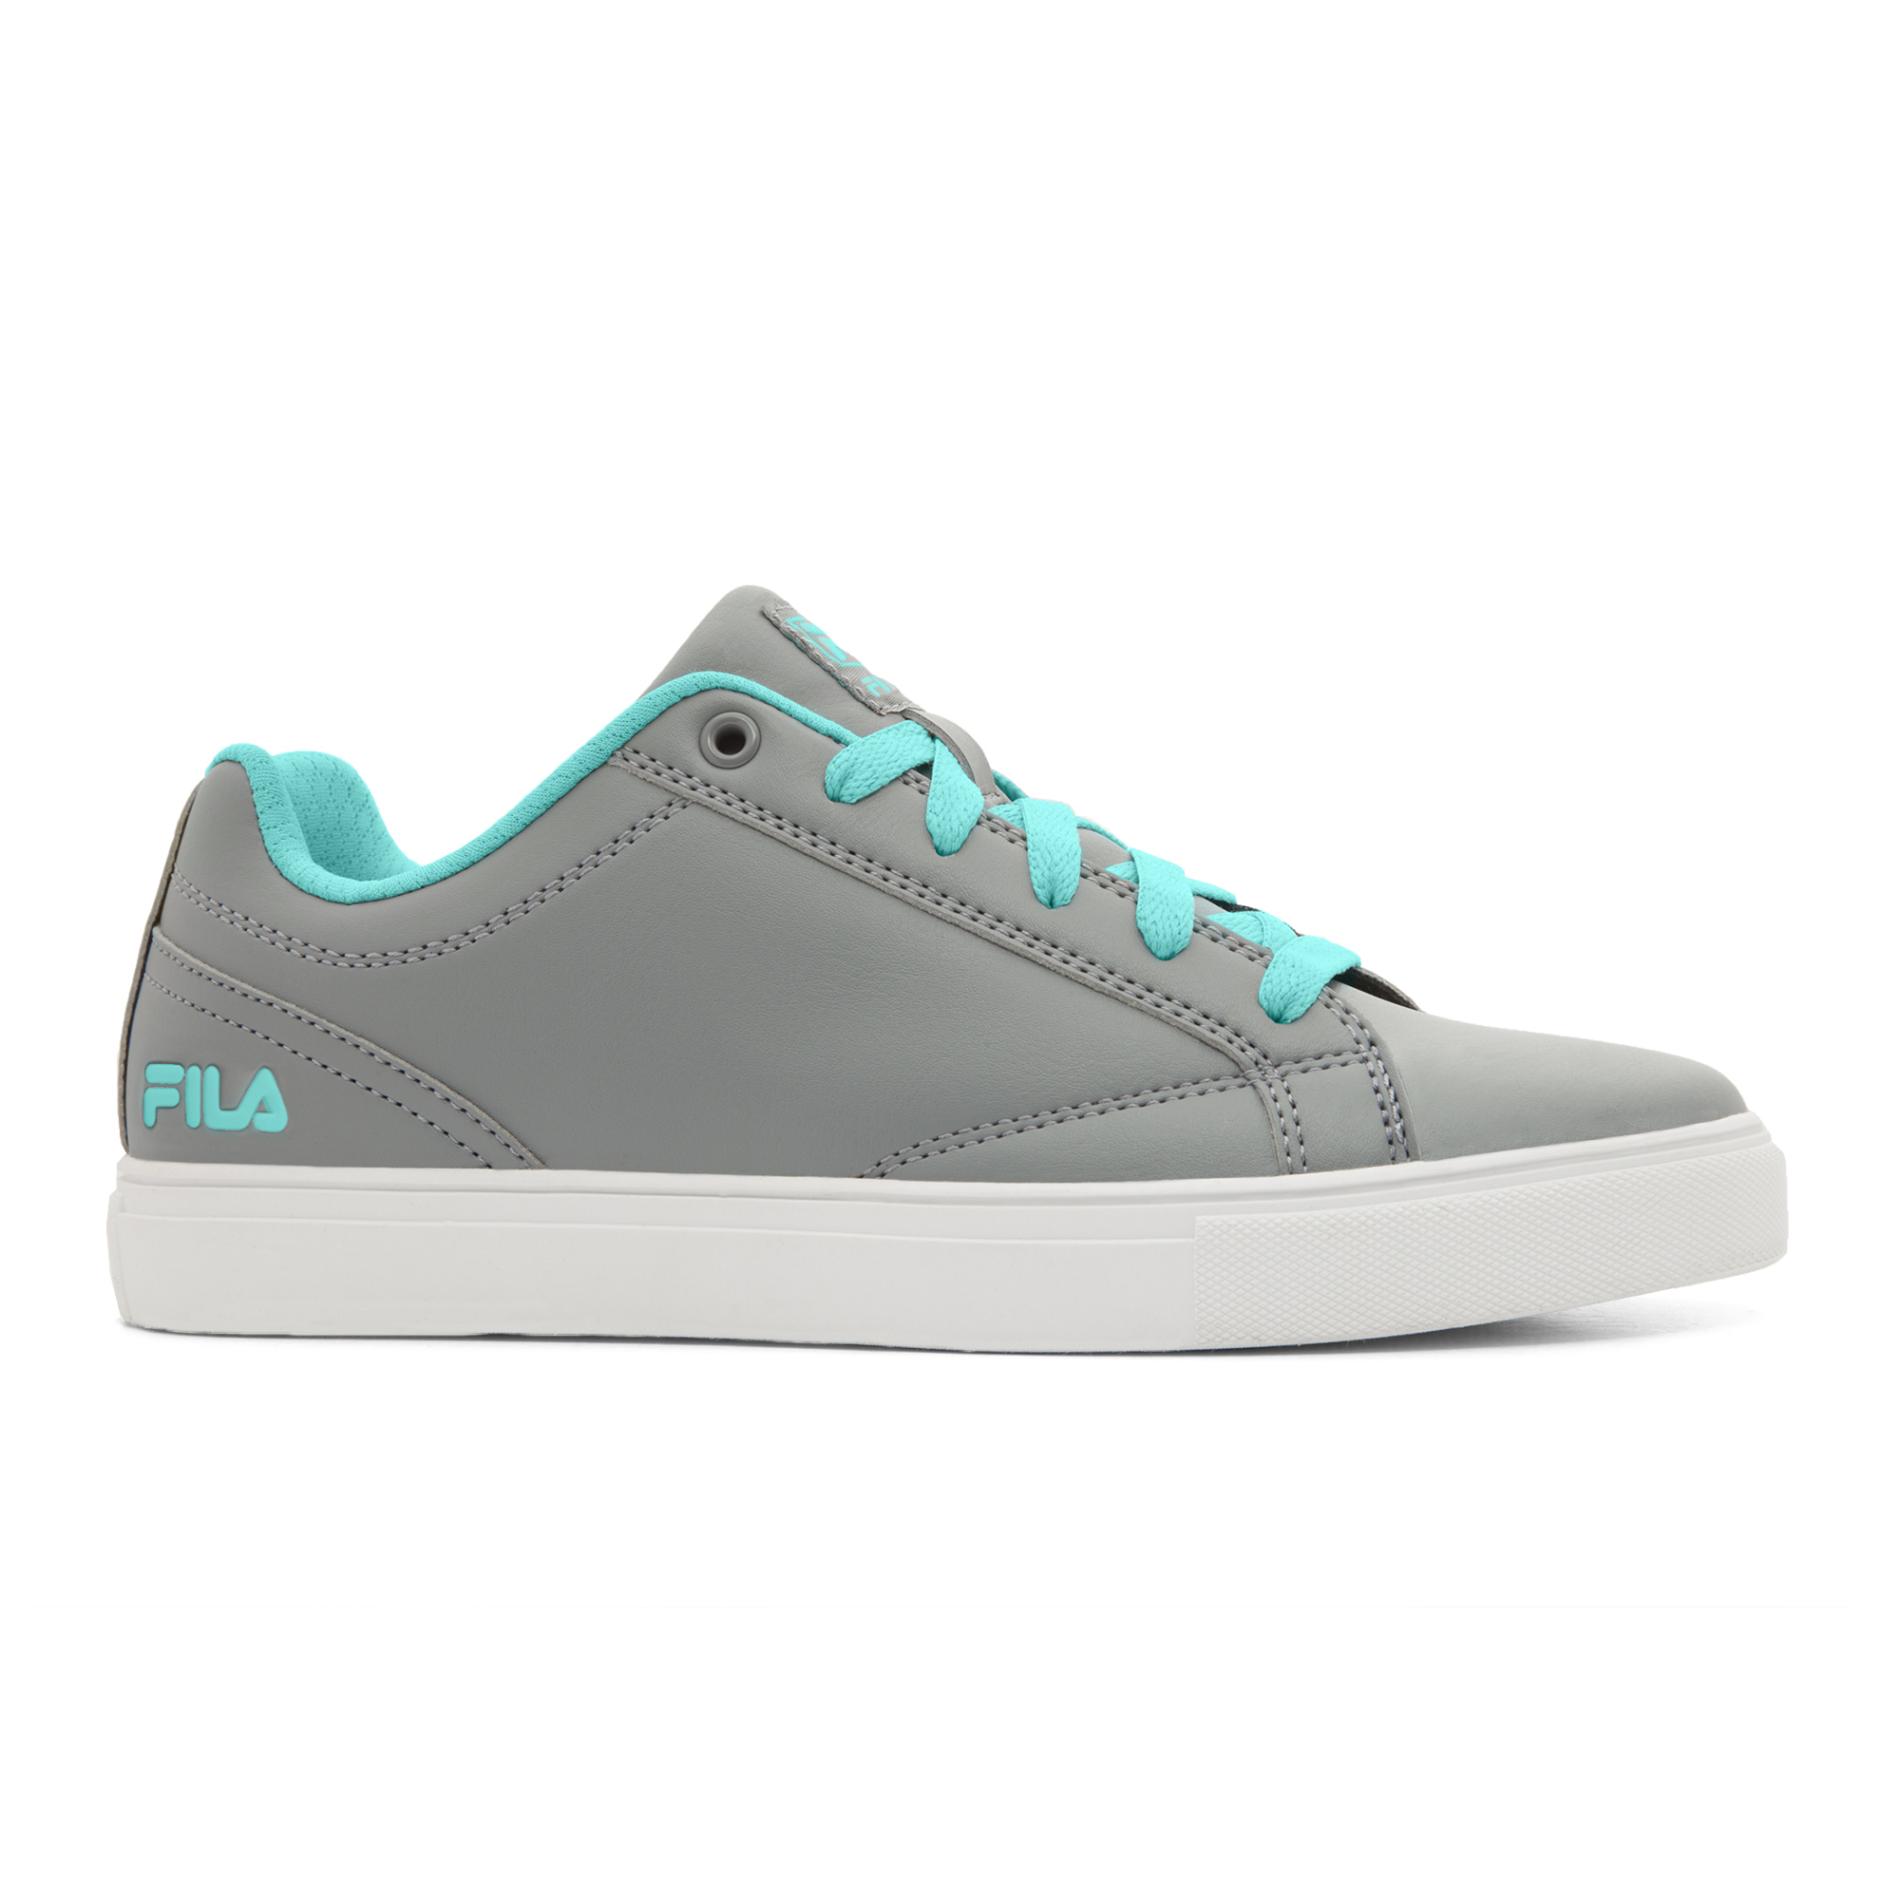 Fila Women's Amalfi Athletic Shoe - Gray/Turquoise